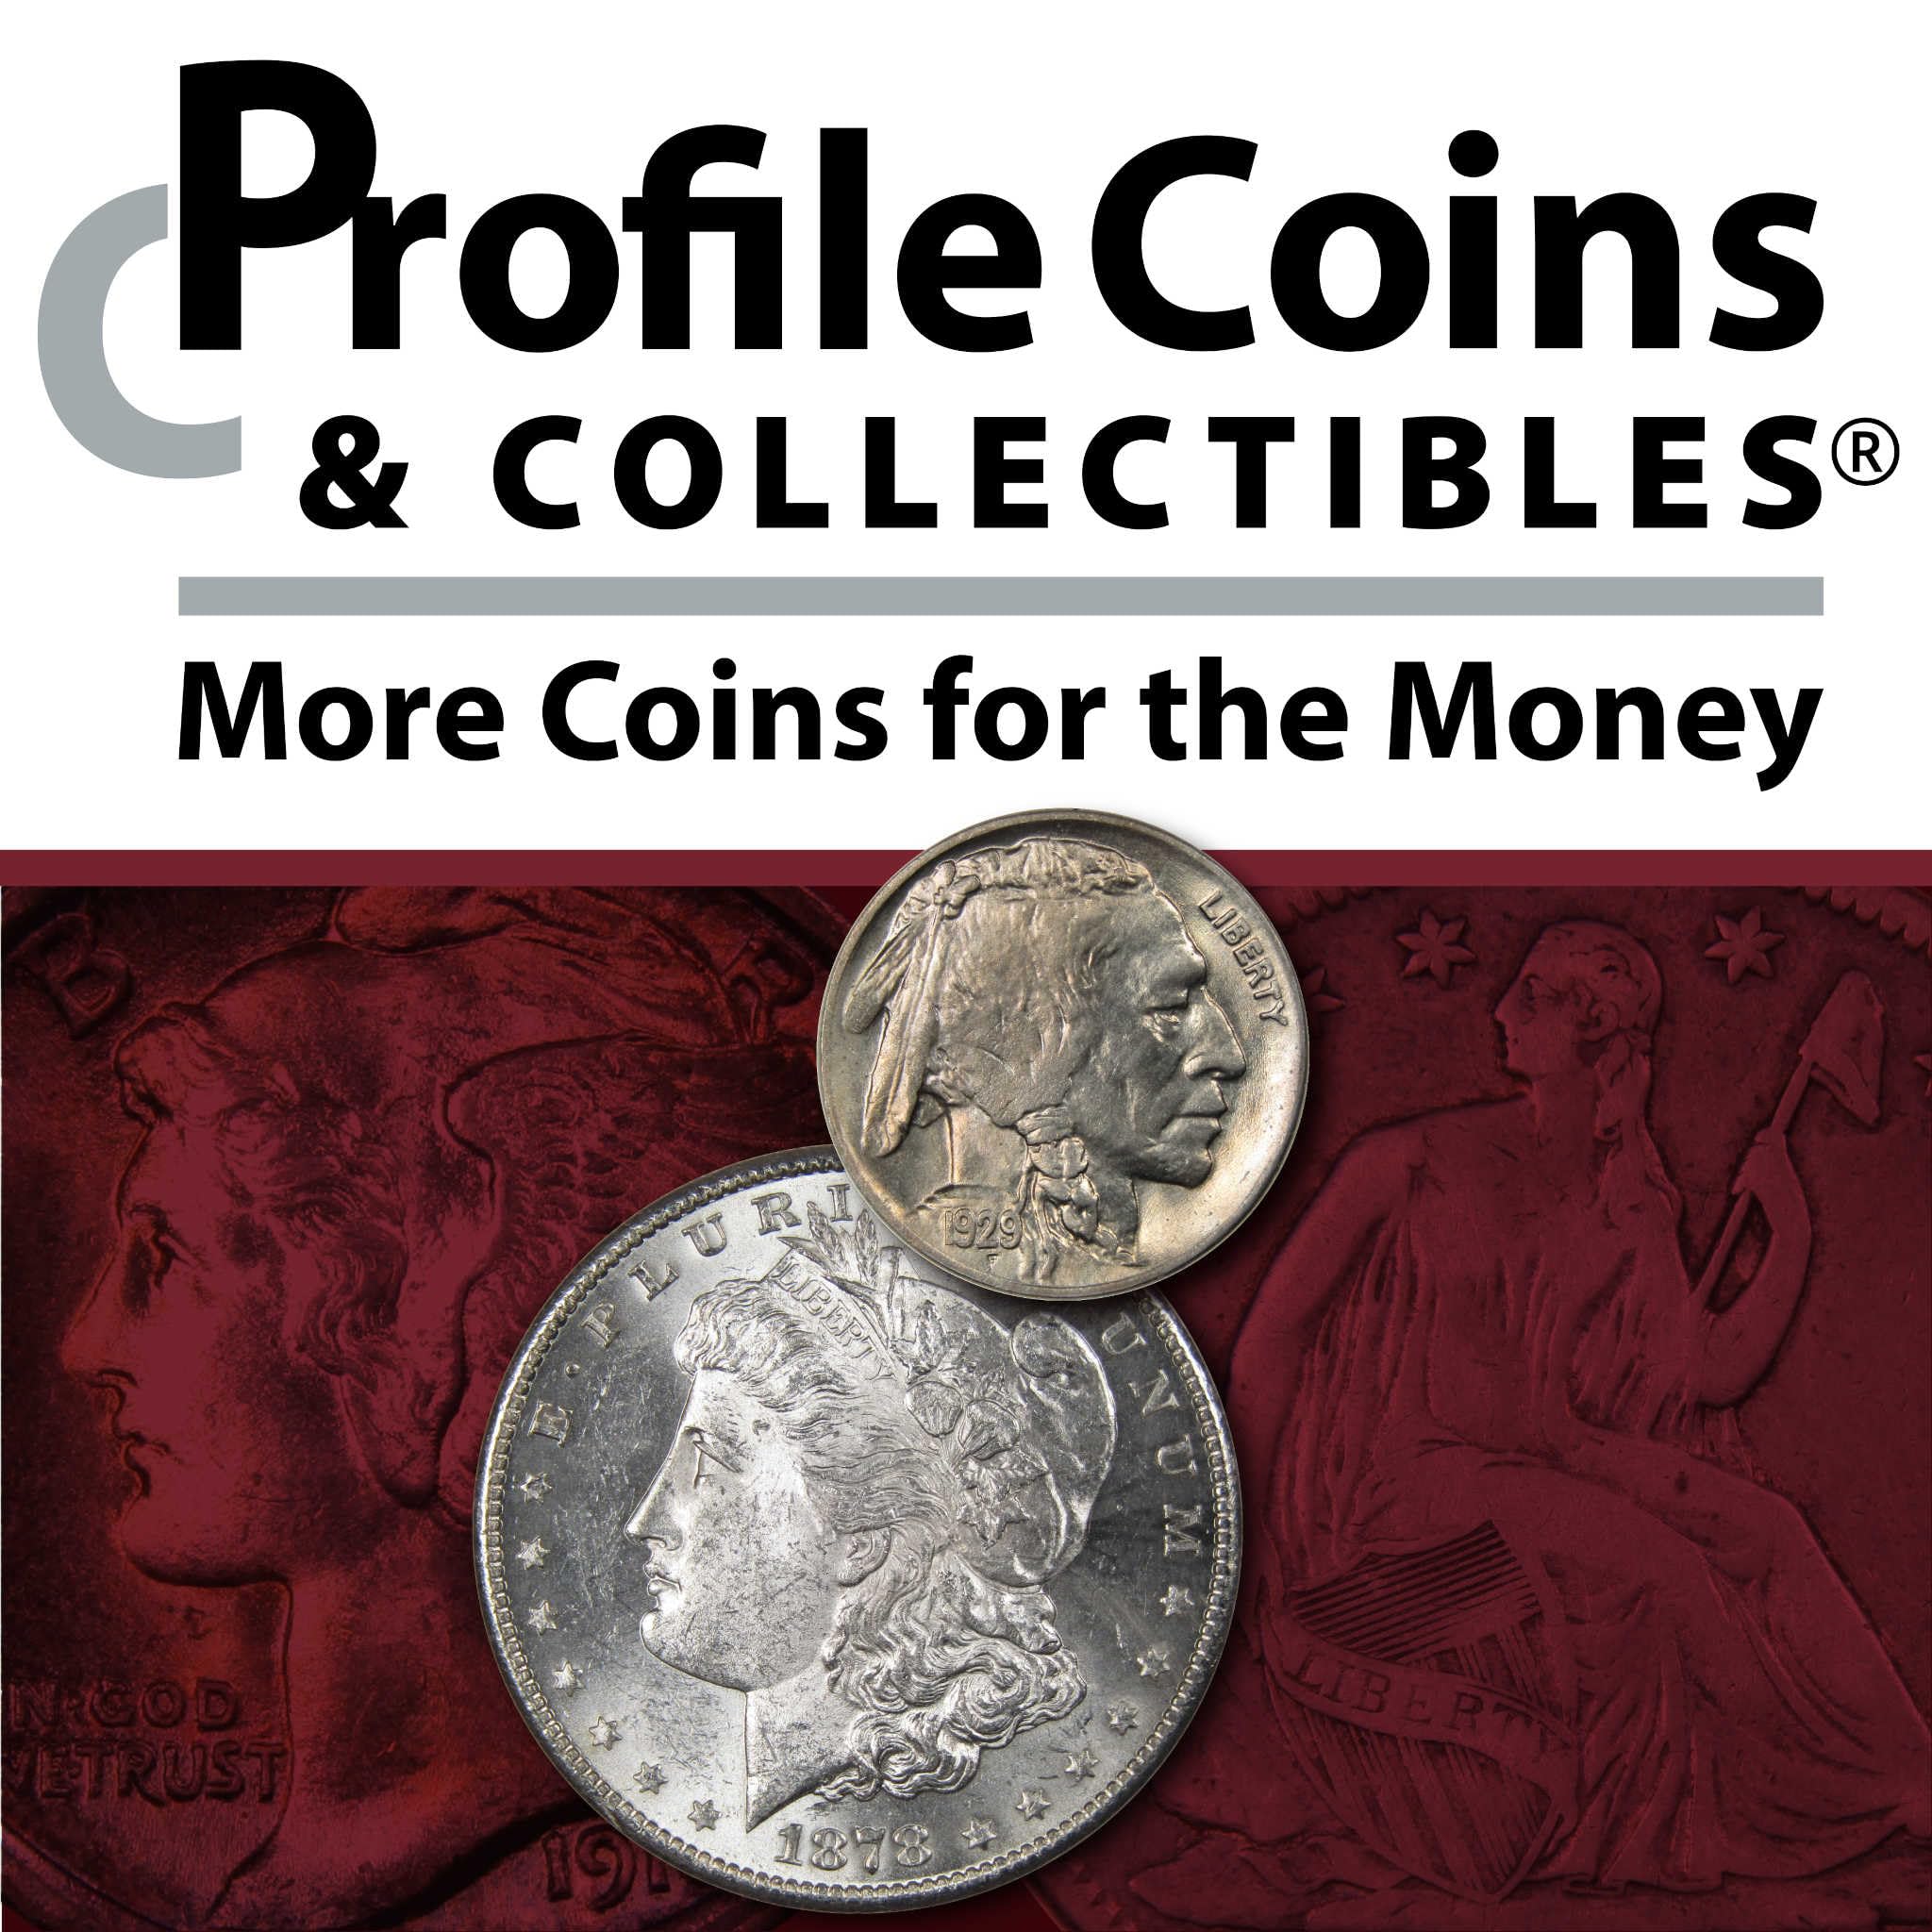 1943 Liberty Walking Half Dollar VF Very Fine 90% Silver 50c US Coin Collectible